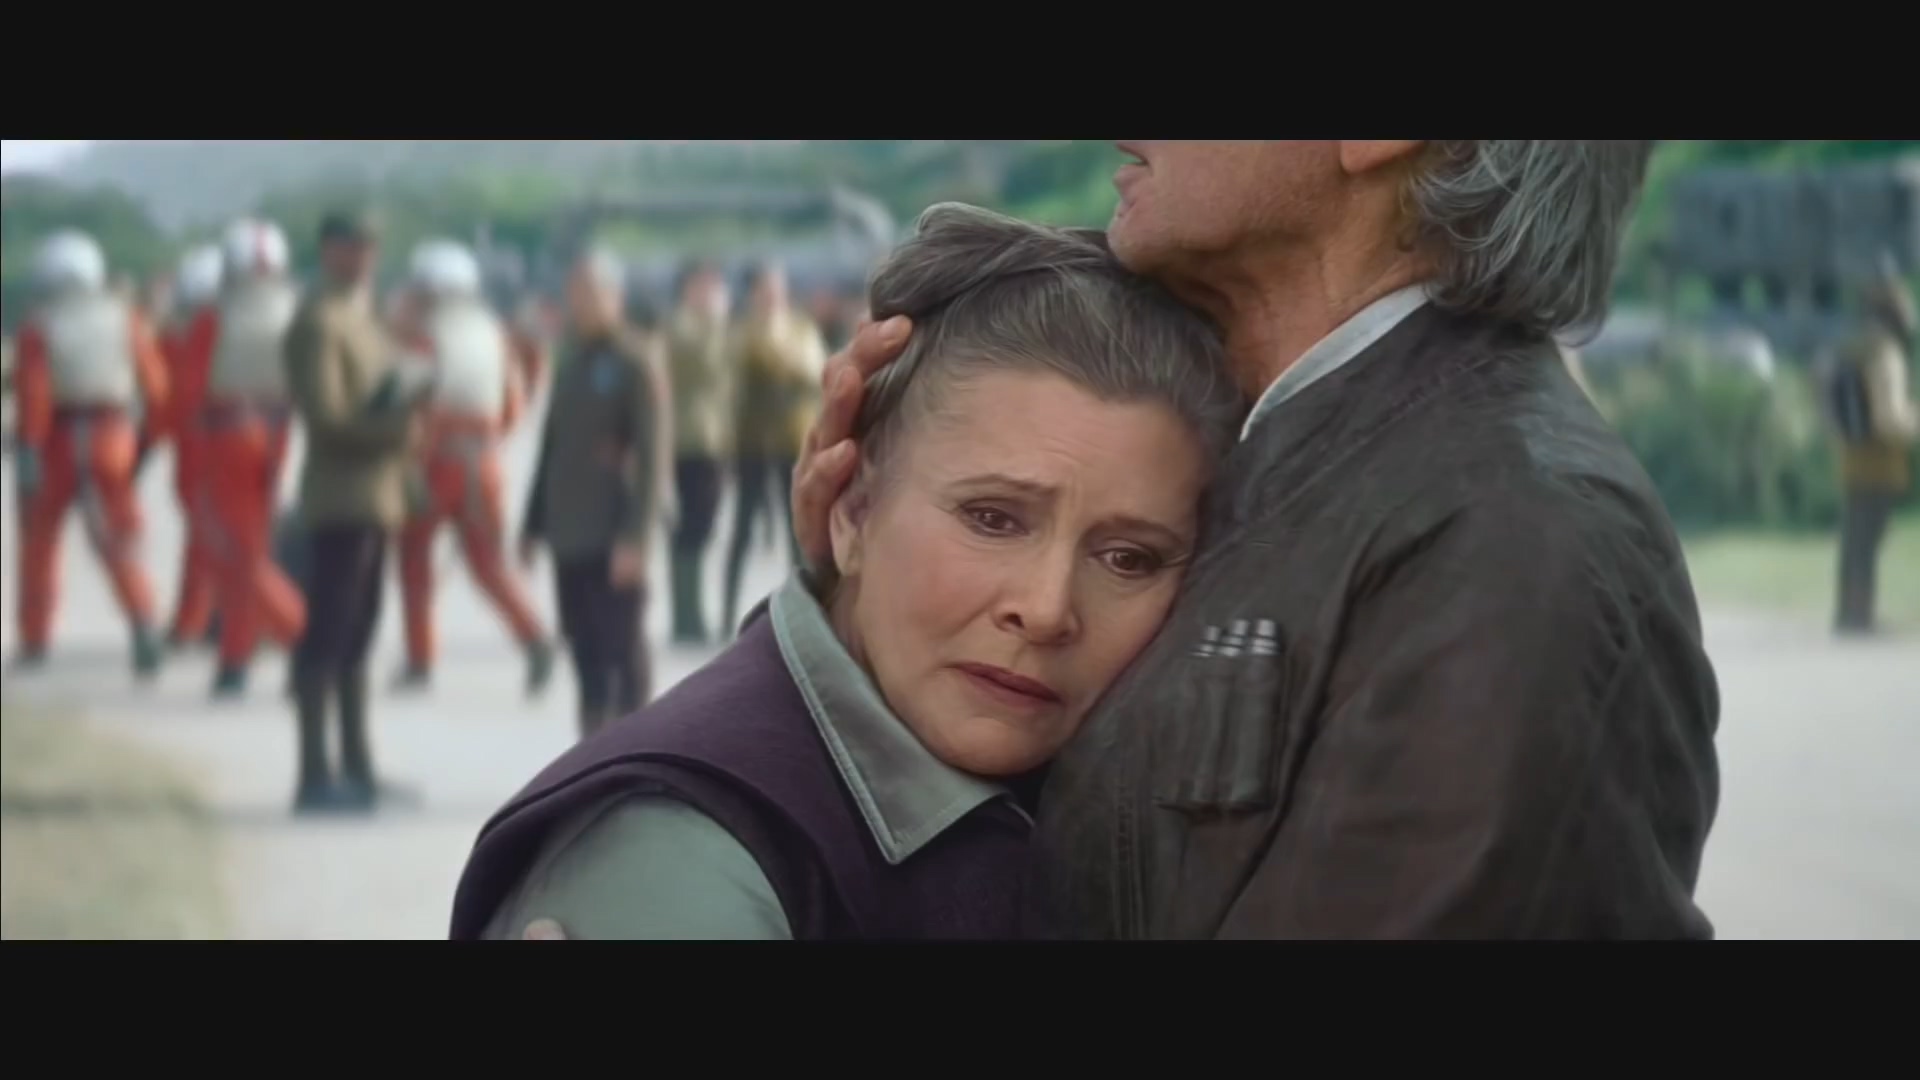 Star Wars_ The Force Awakens Trailer (Official) - YouTube (1080p).mp4_20151226_145253.703.jpg